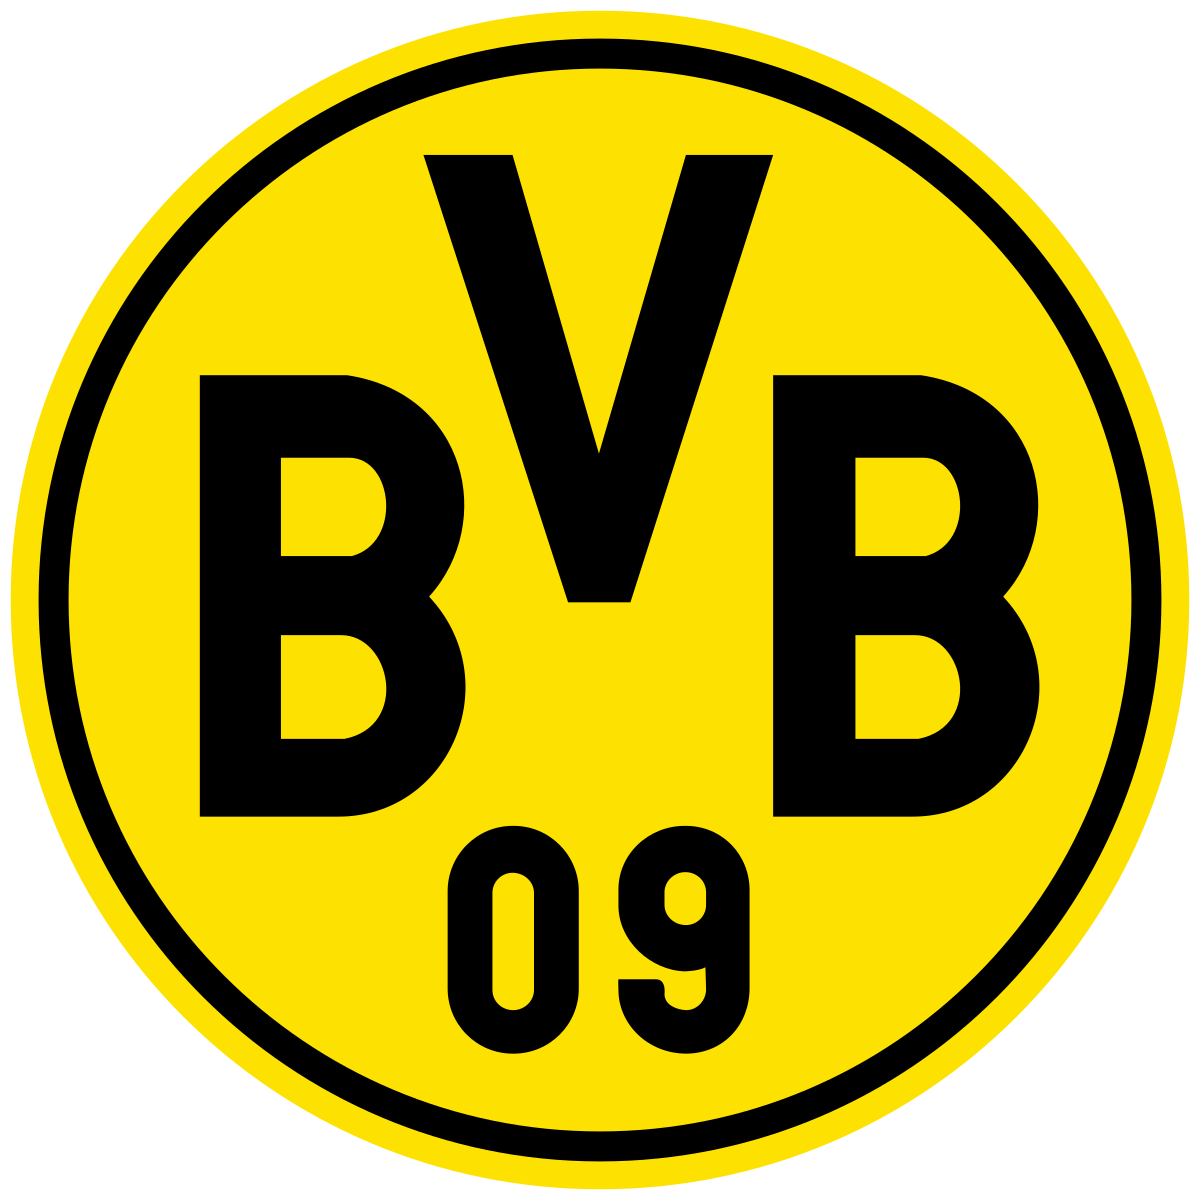 B.Dortmund Sub 19